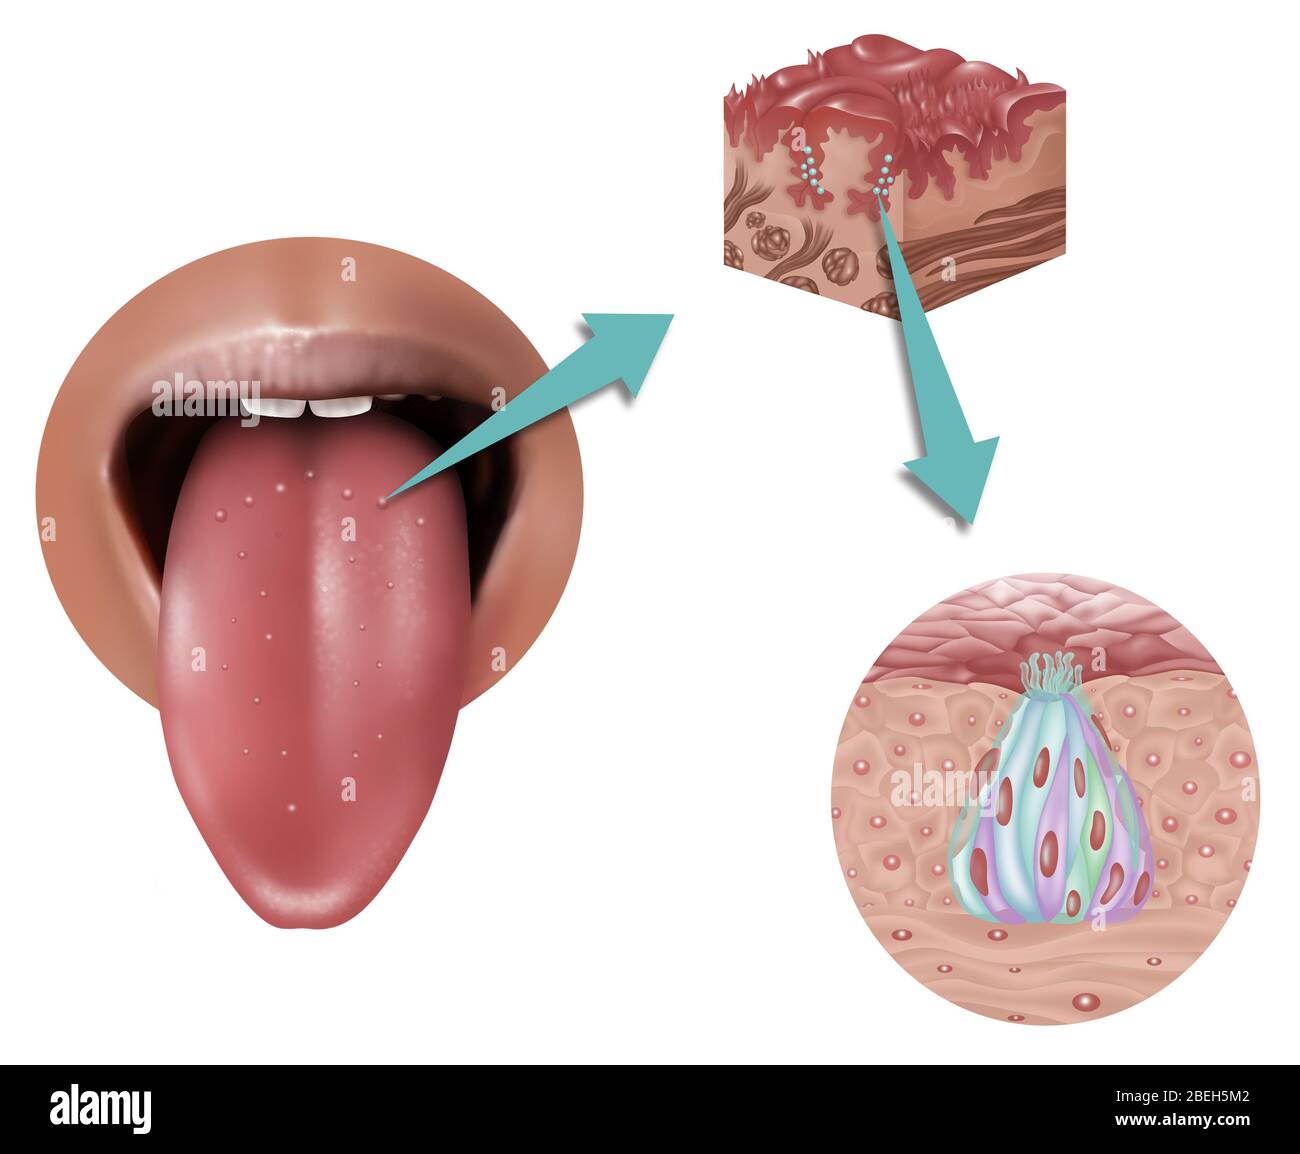 Anatomy of Taste, Illustration Stock Photo